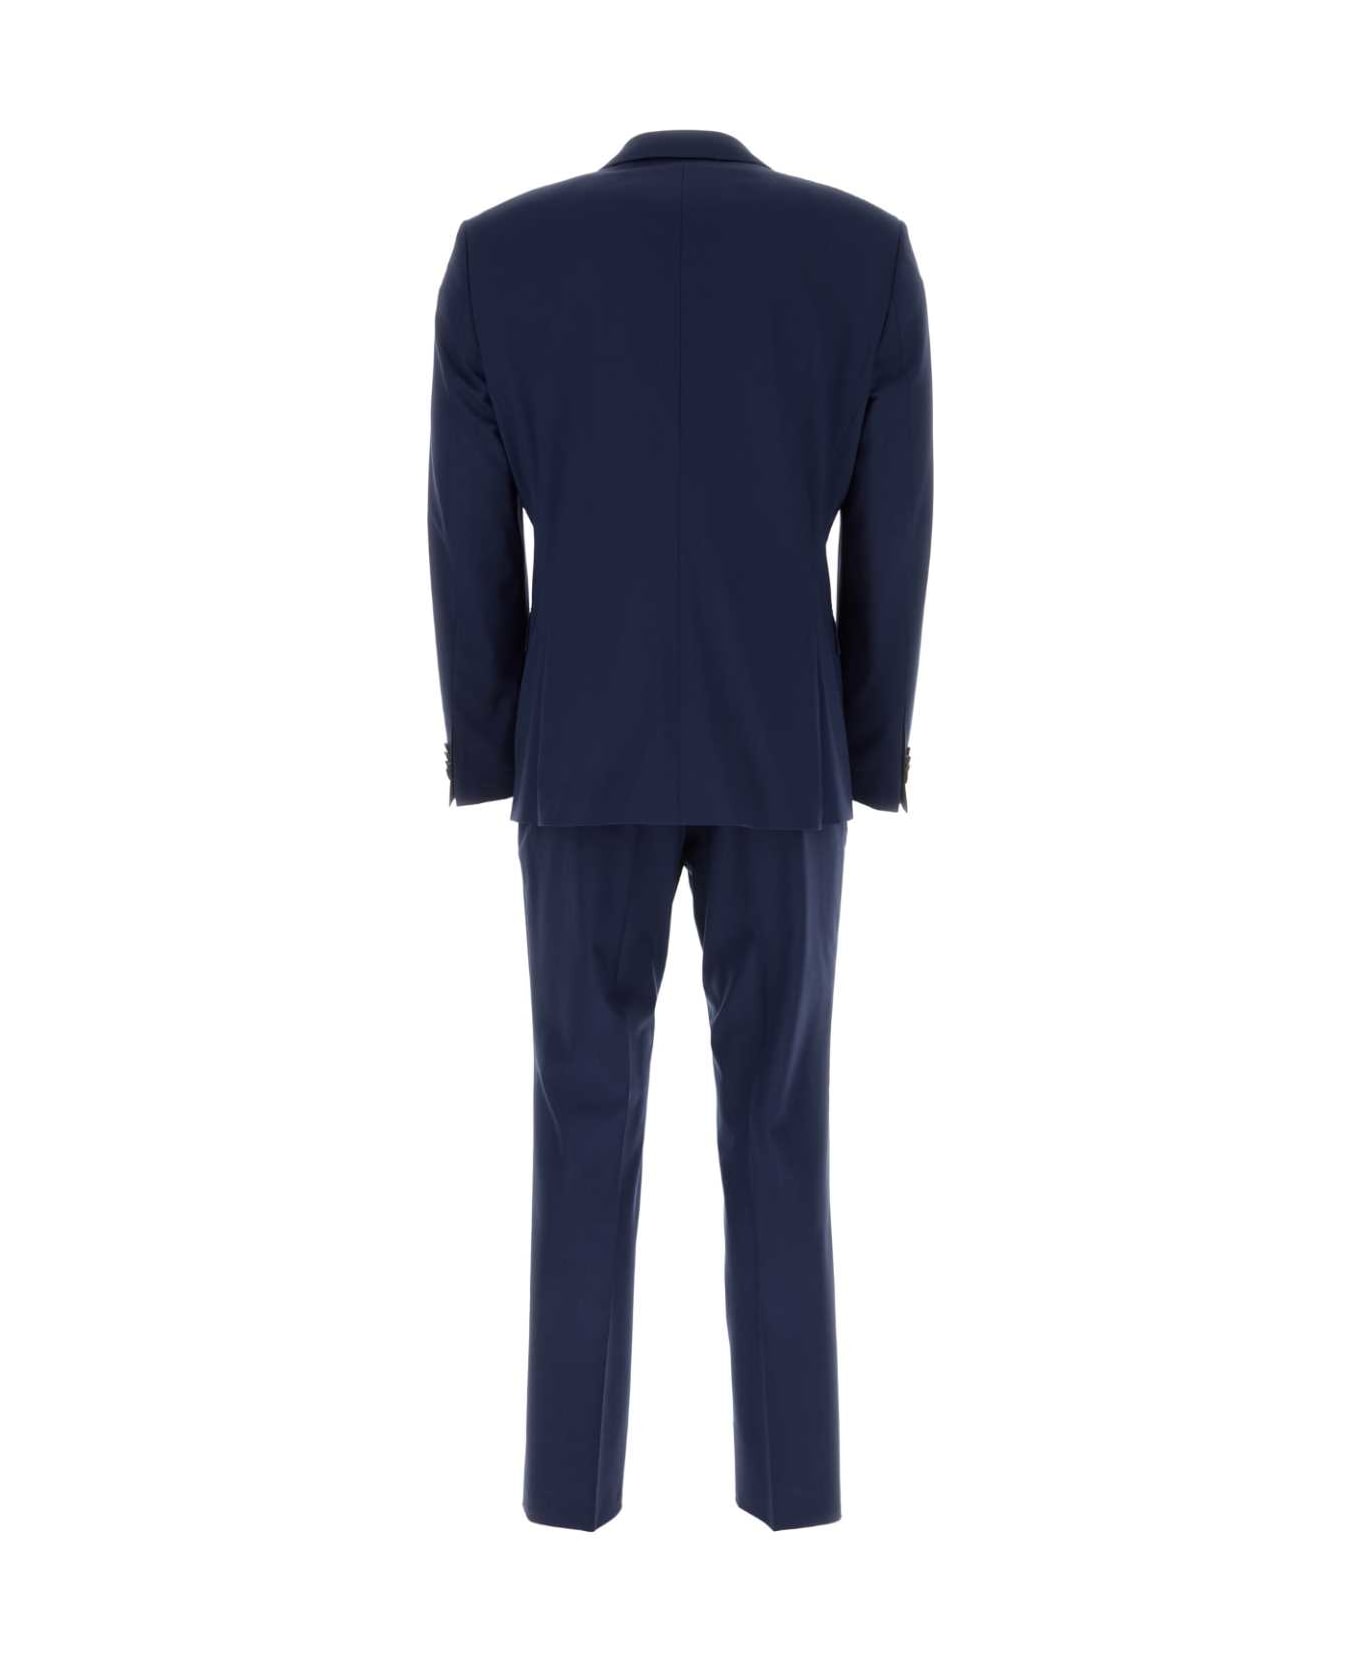 Hugo Boss Blue Stretch Wool Suit - OPENBLUE